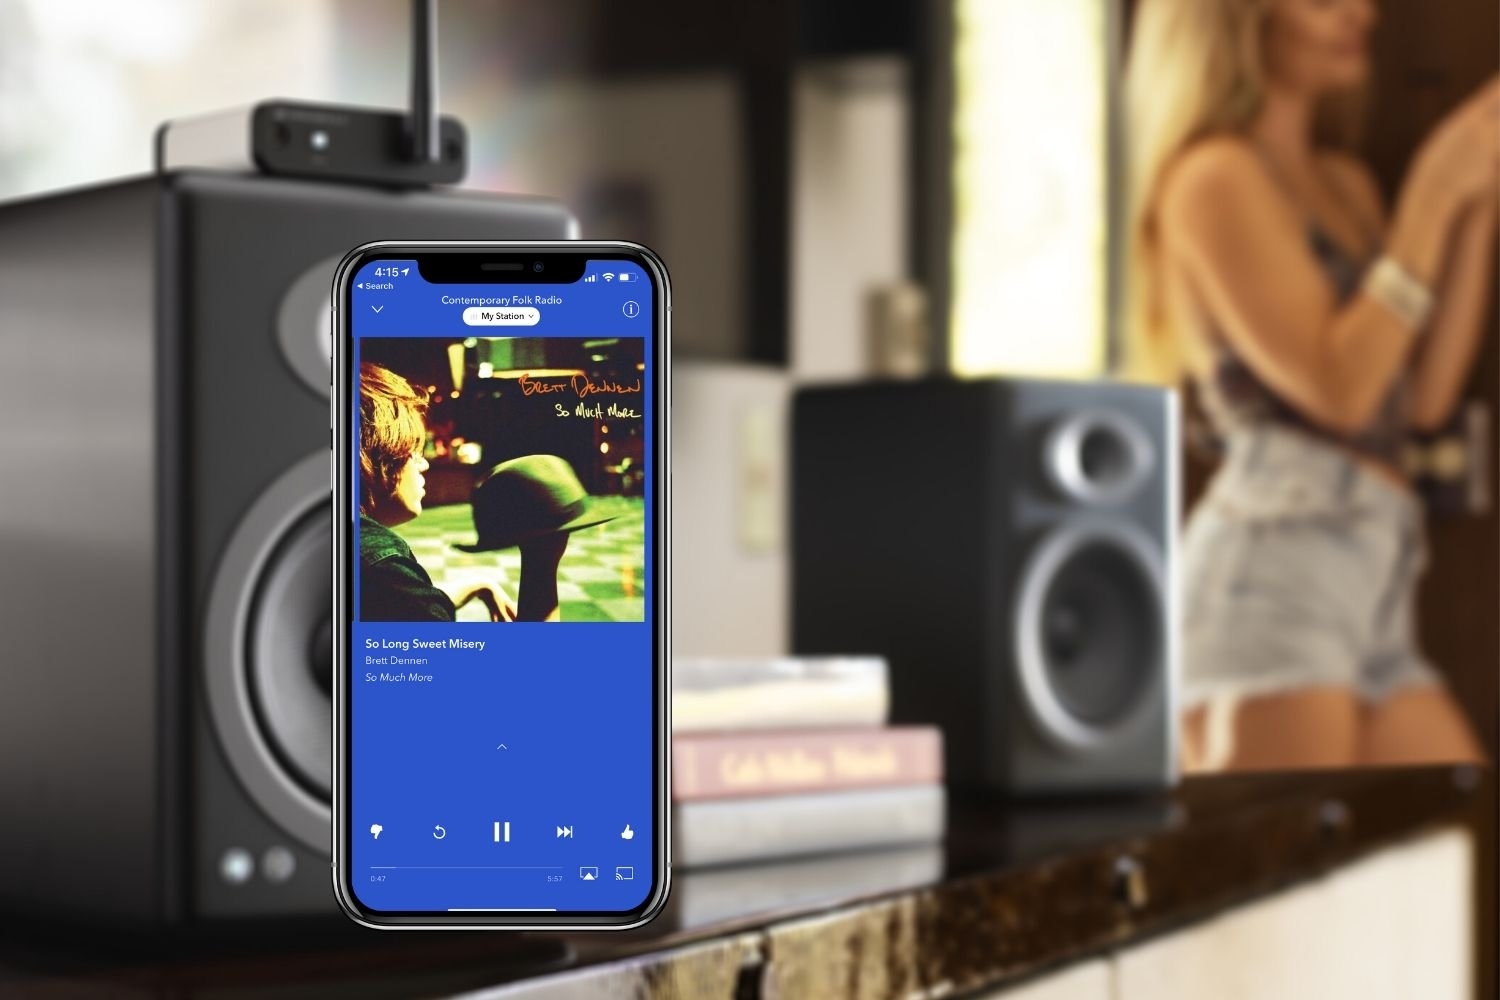 Audioengine giới thiệu WiFi Audio Receiver B-Fi có khả năng stream nhạc qua WiFi